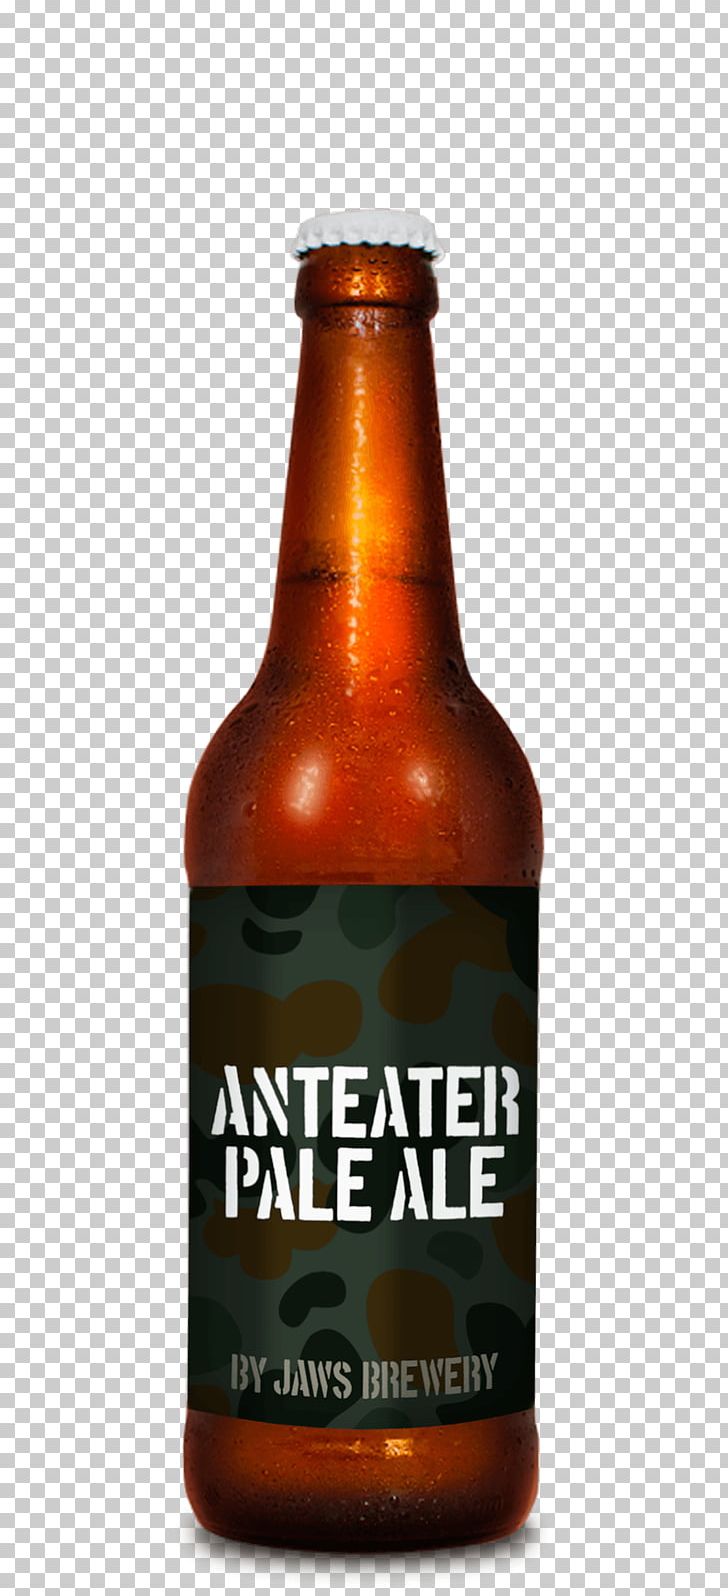 Pale Ale Beer Bottle Wine PNG, Clipart, Ale, Anteater, Beer, Beer Bottle, Bottle Free PNG Download